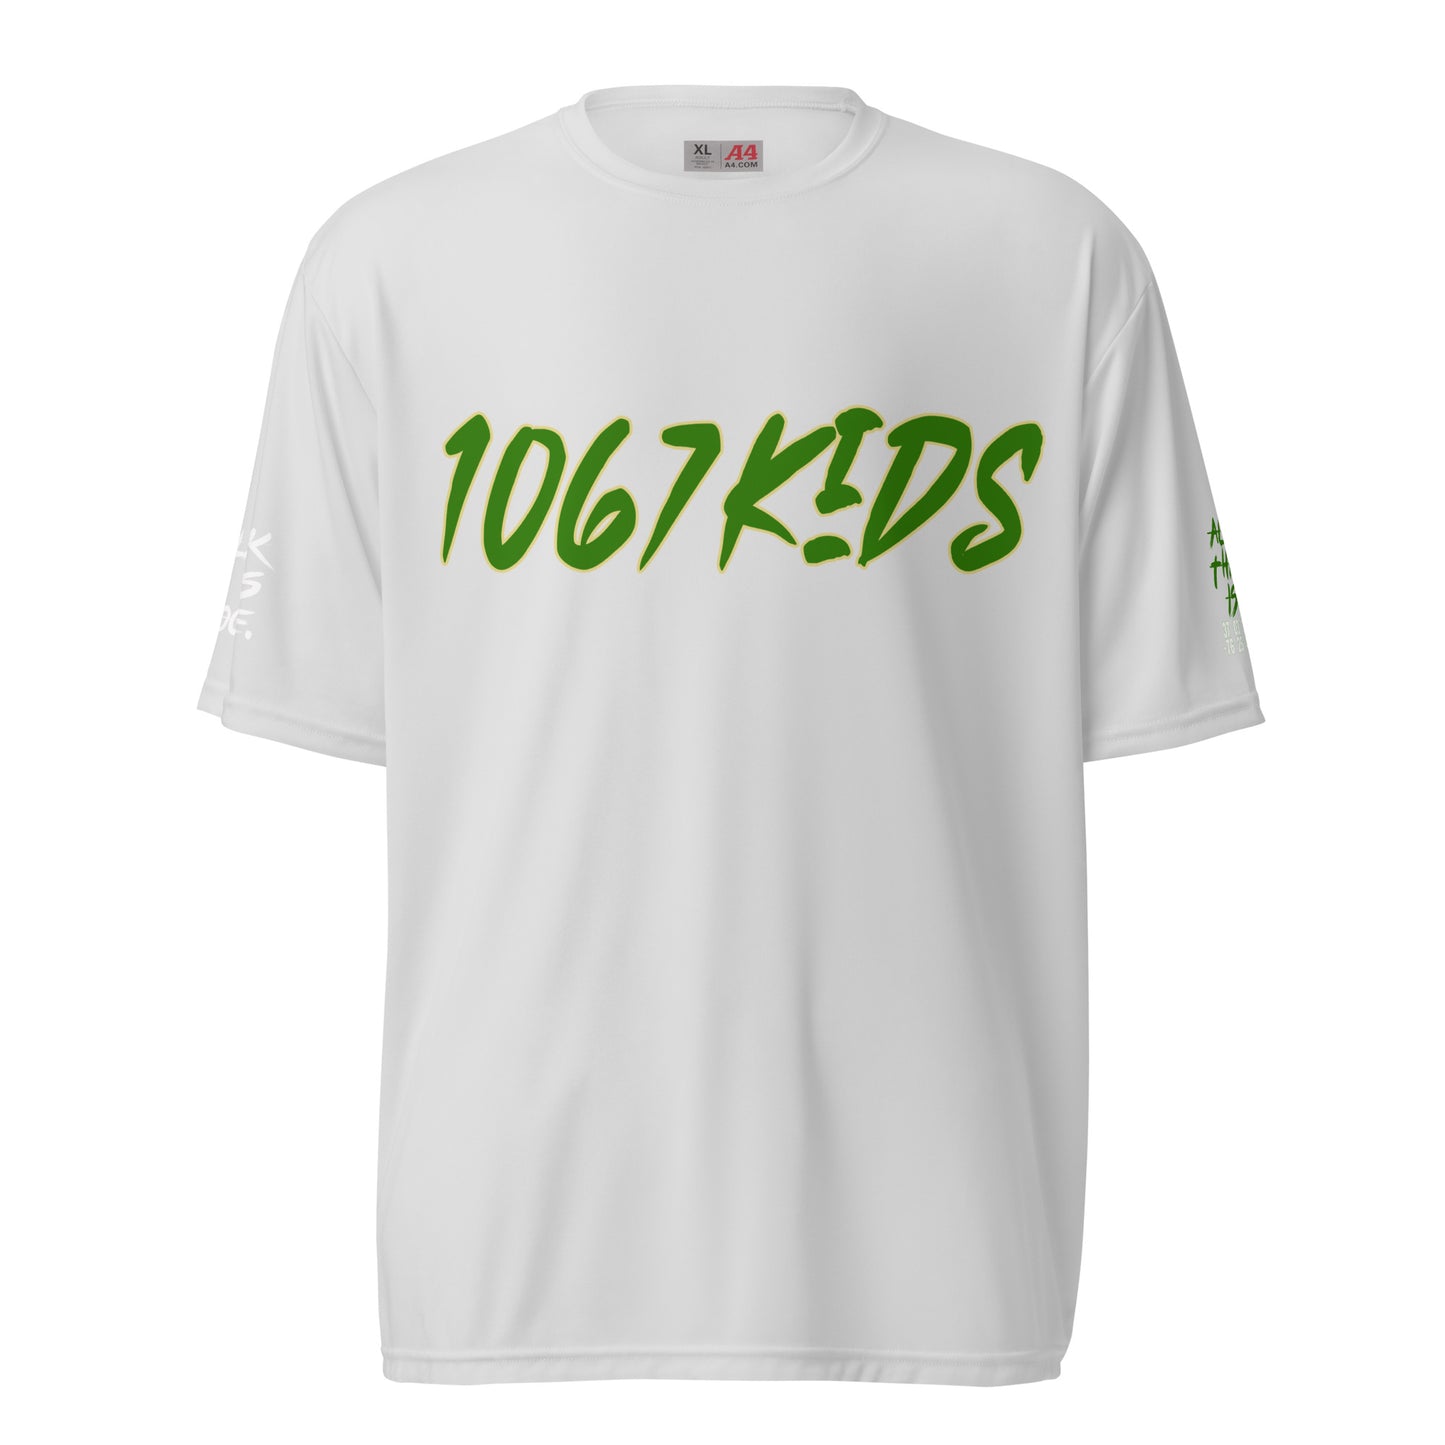 1067 Kids crew neck t-shirt